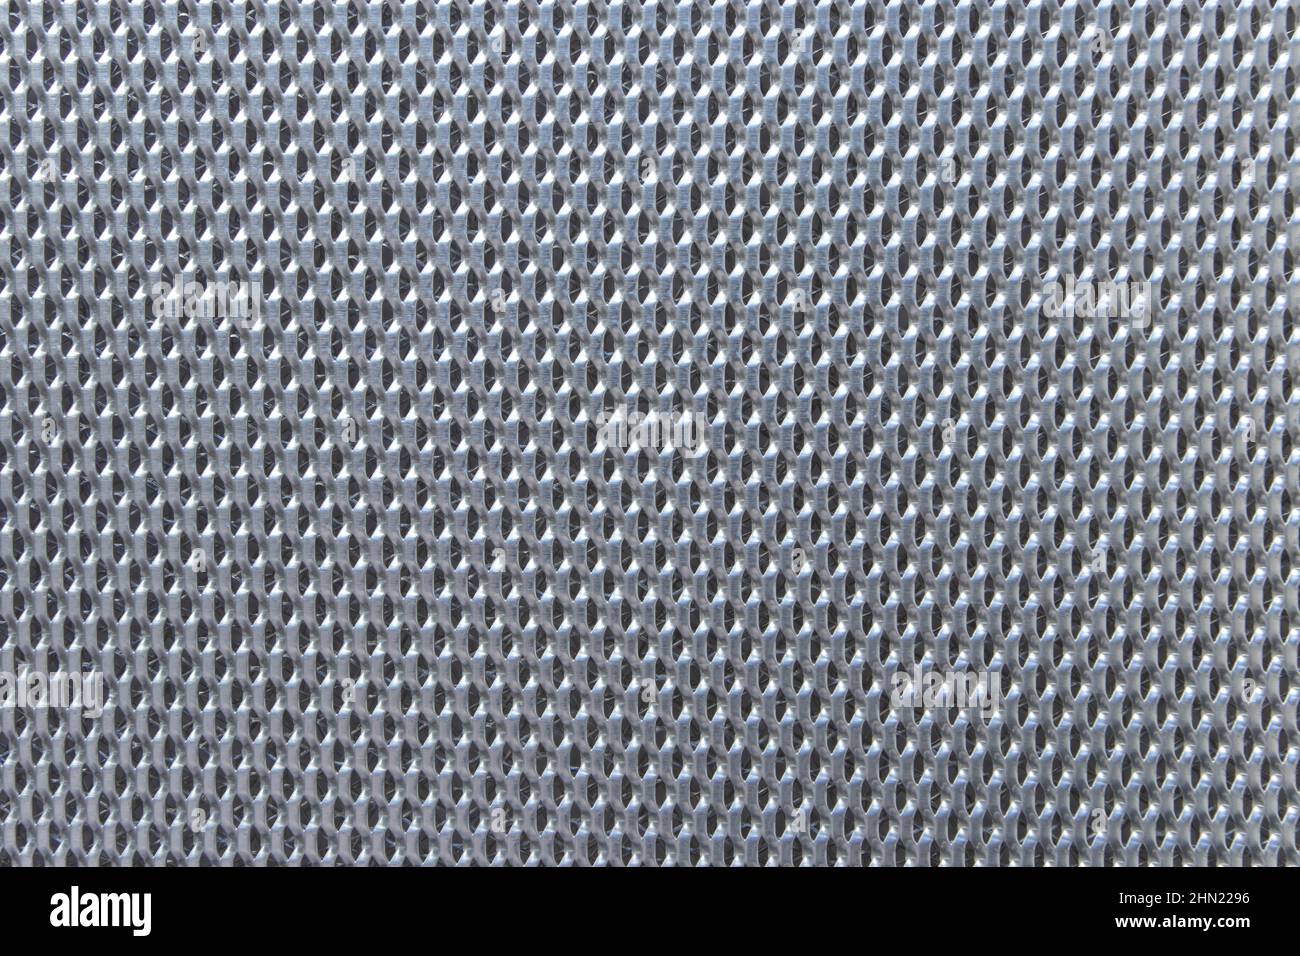 Shiny metallic contemporary hitech background. Decorative metal mesh. Stock Photo